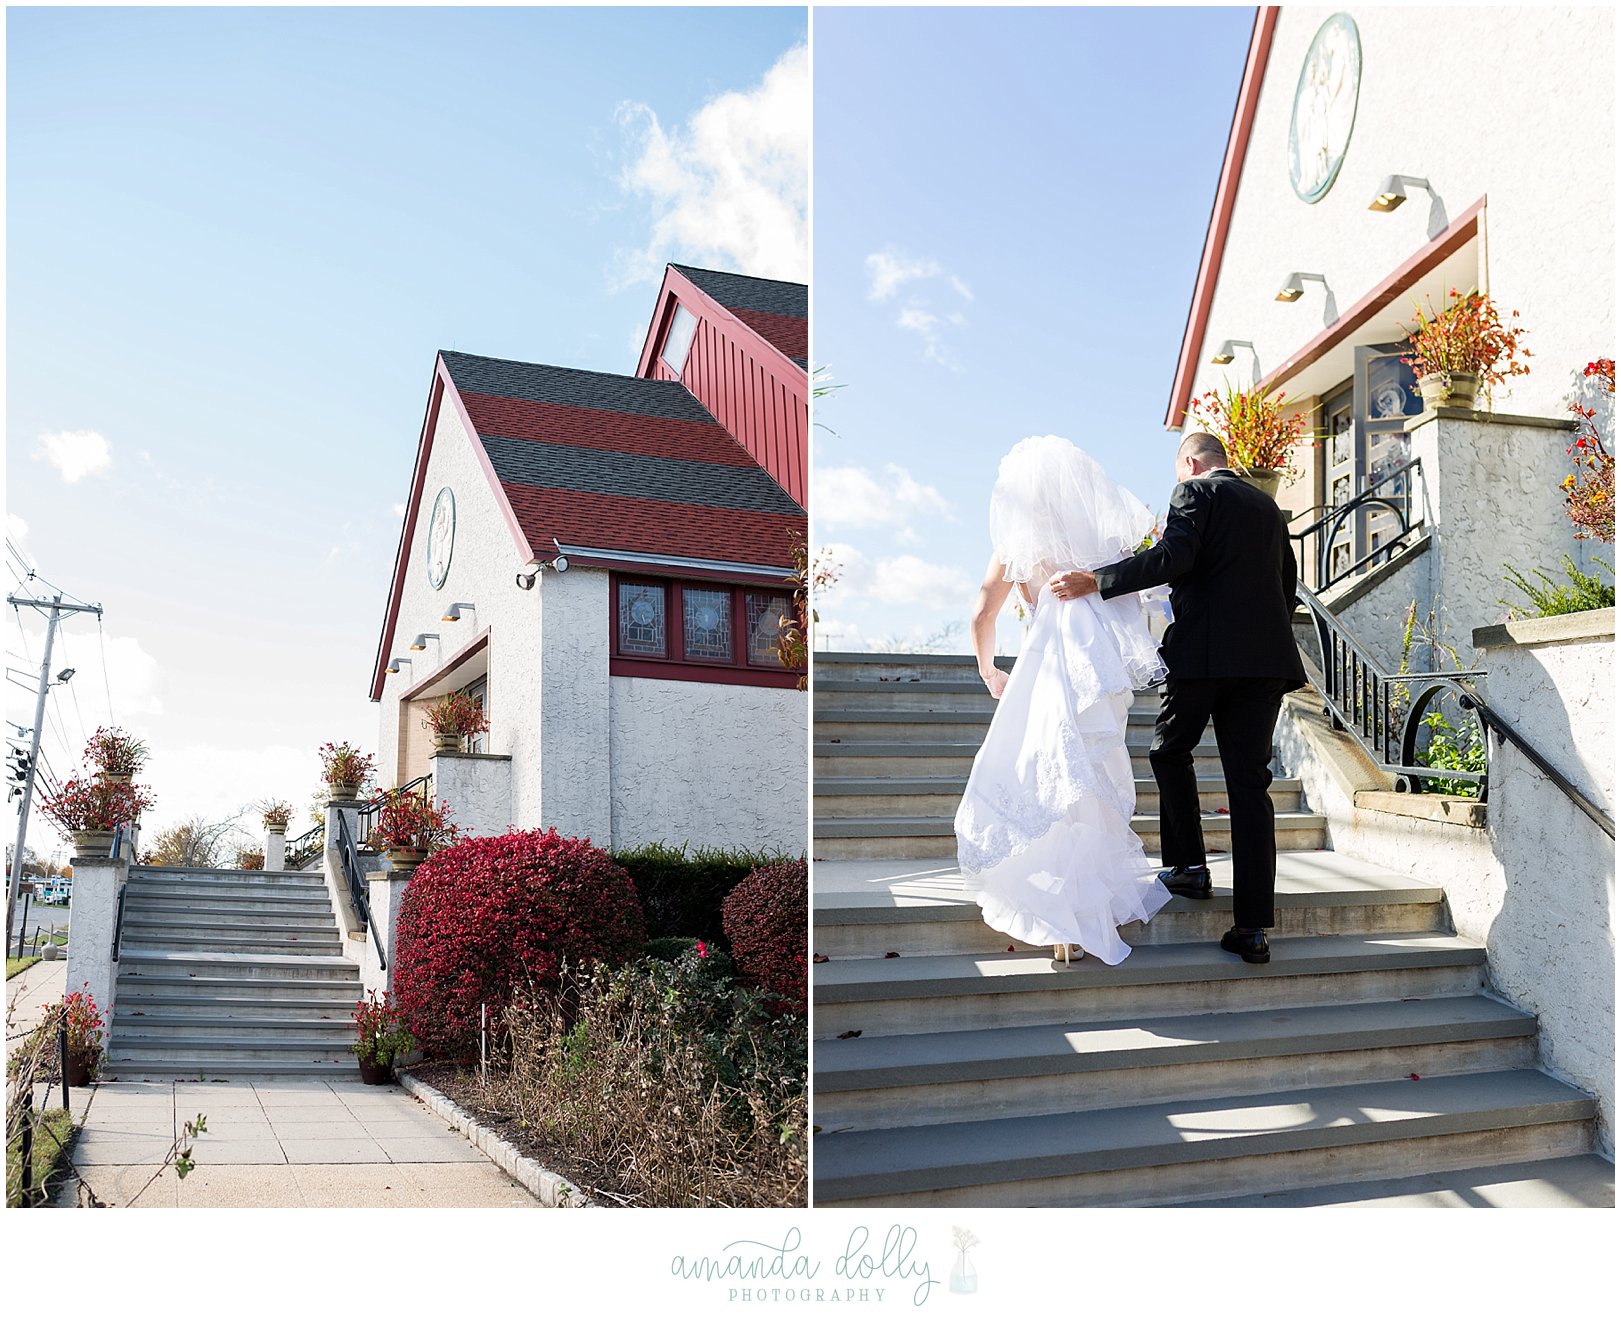 The English Manor Wedding Photography